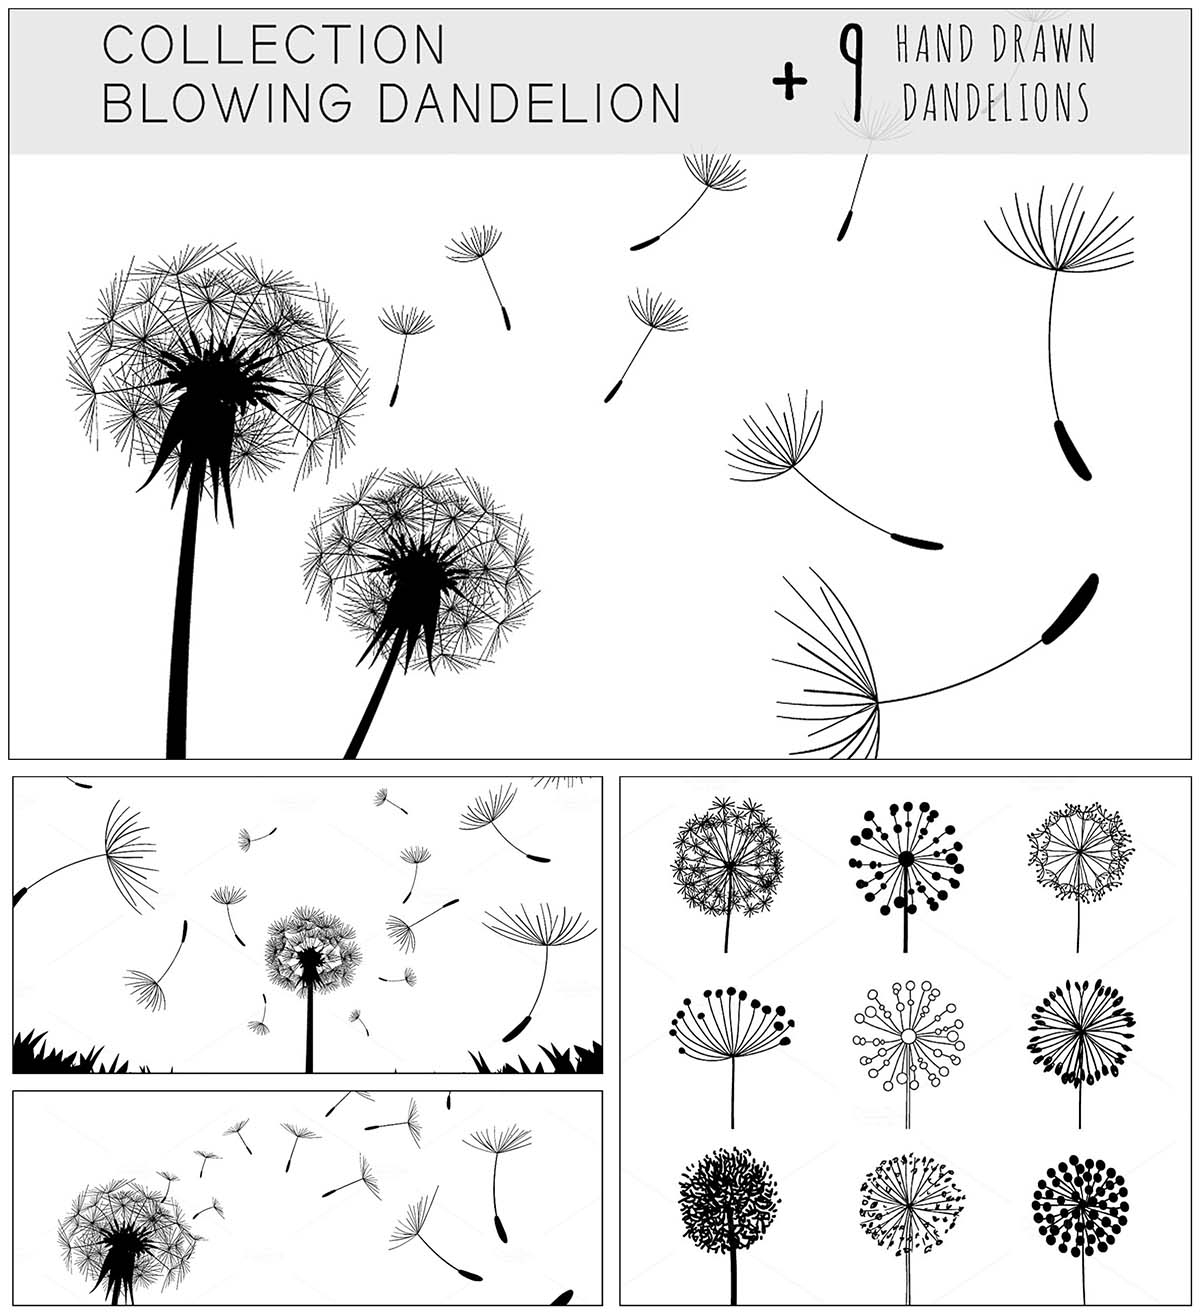 Blowing dandelion illustrations